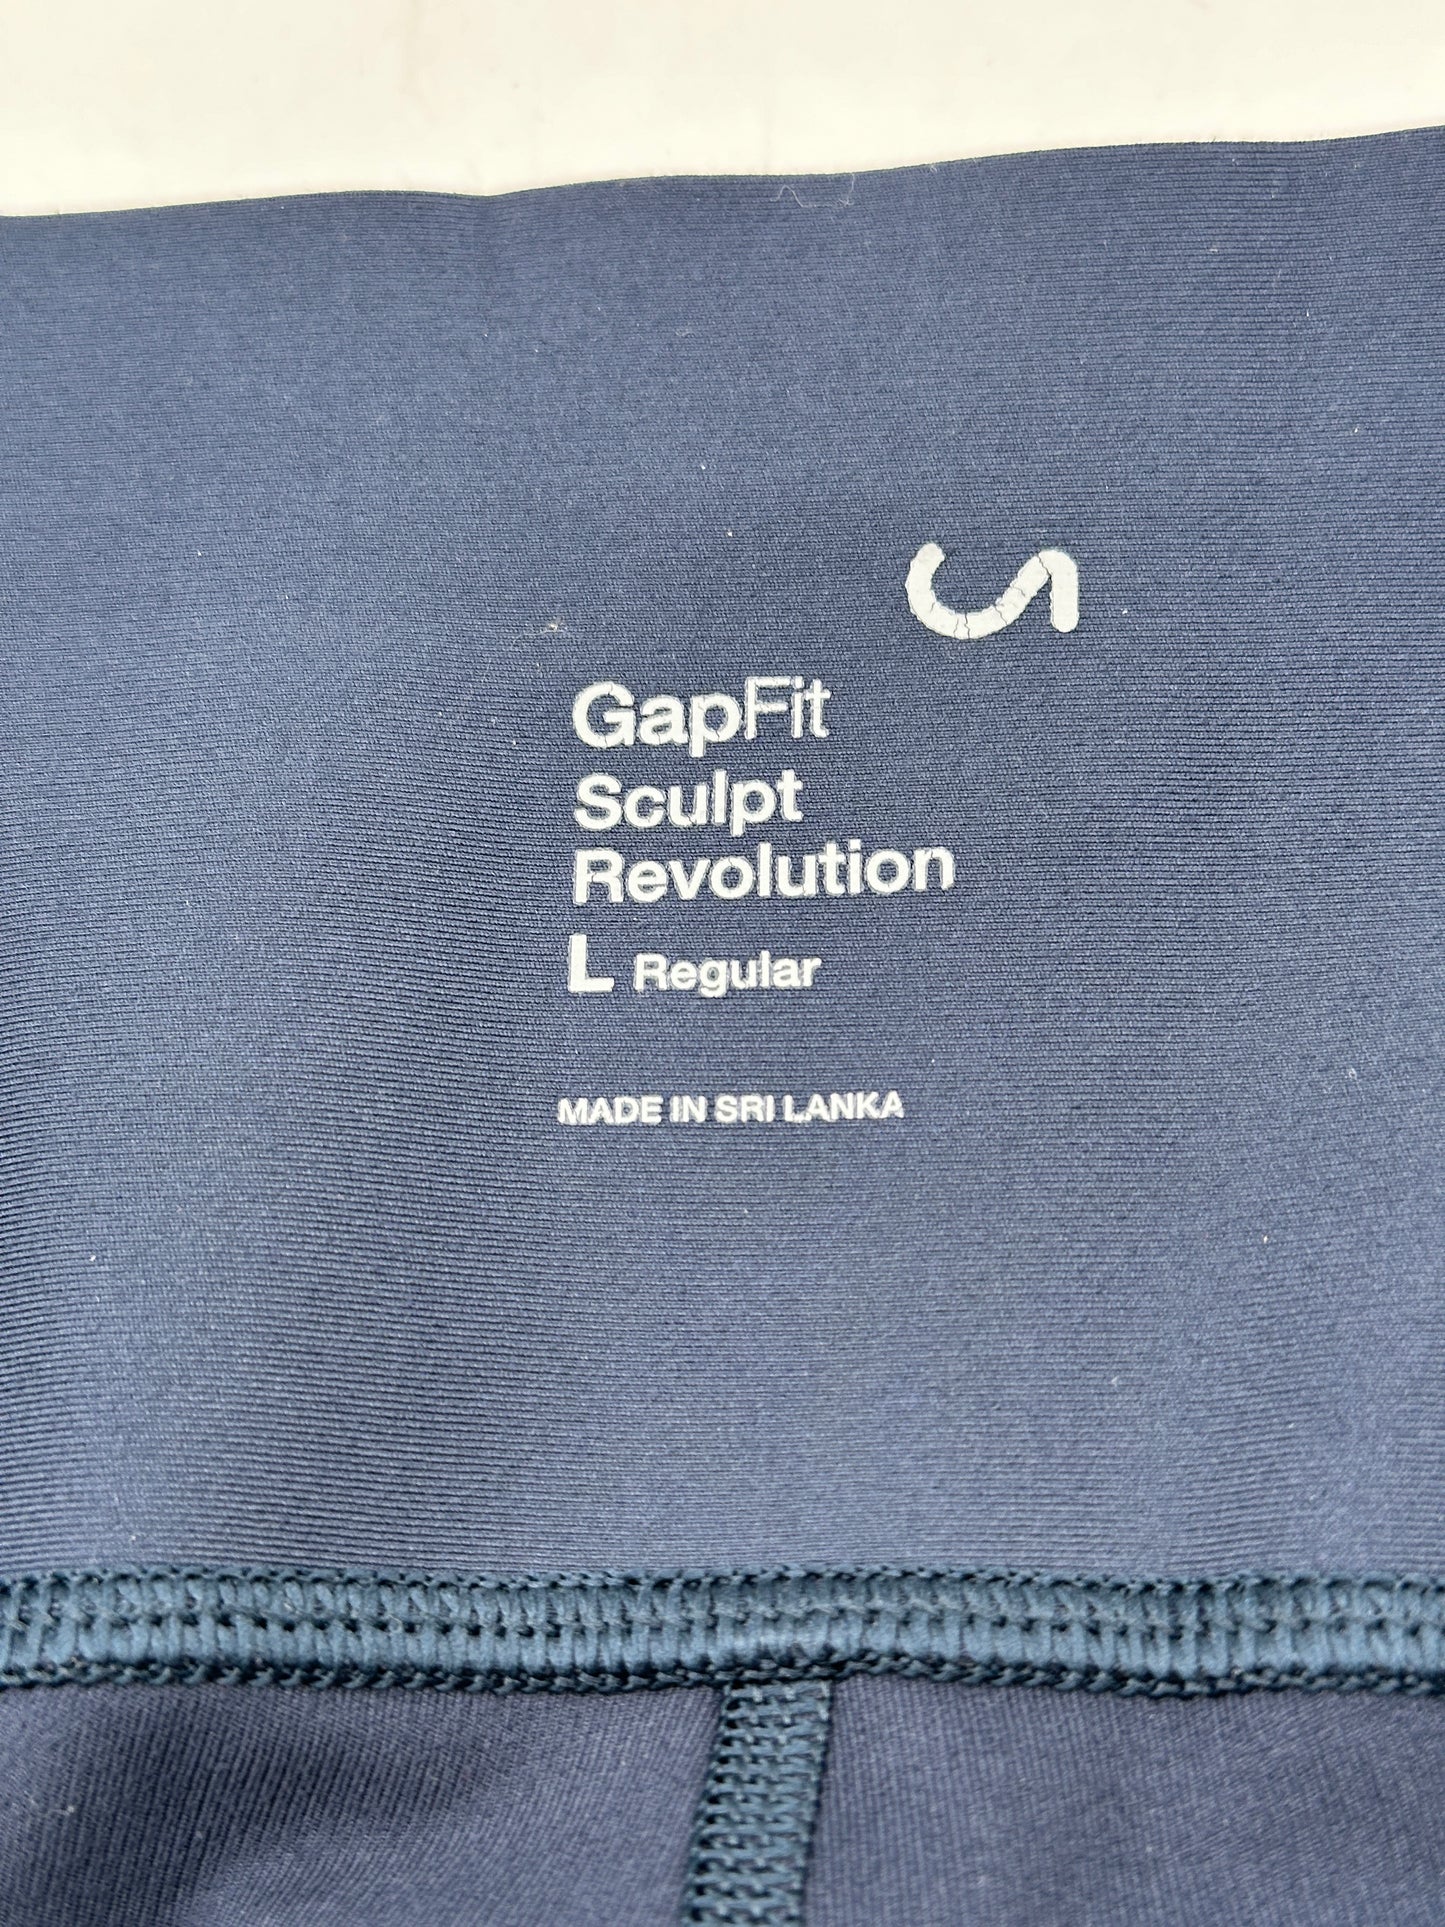 GapFit Size L Regular Navy Blue Sculpt Revolution Capri Leggings